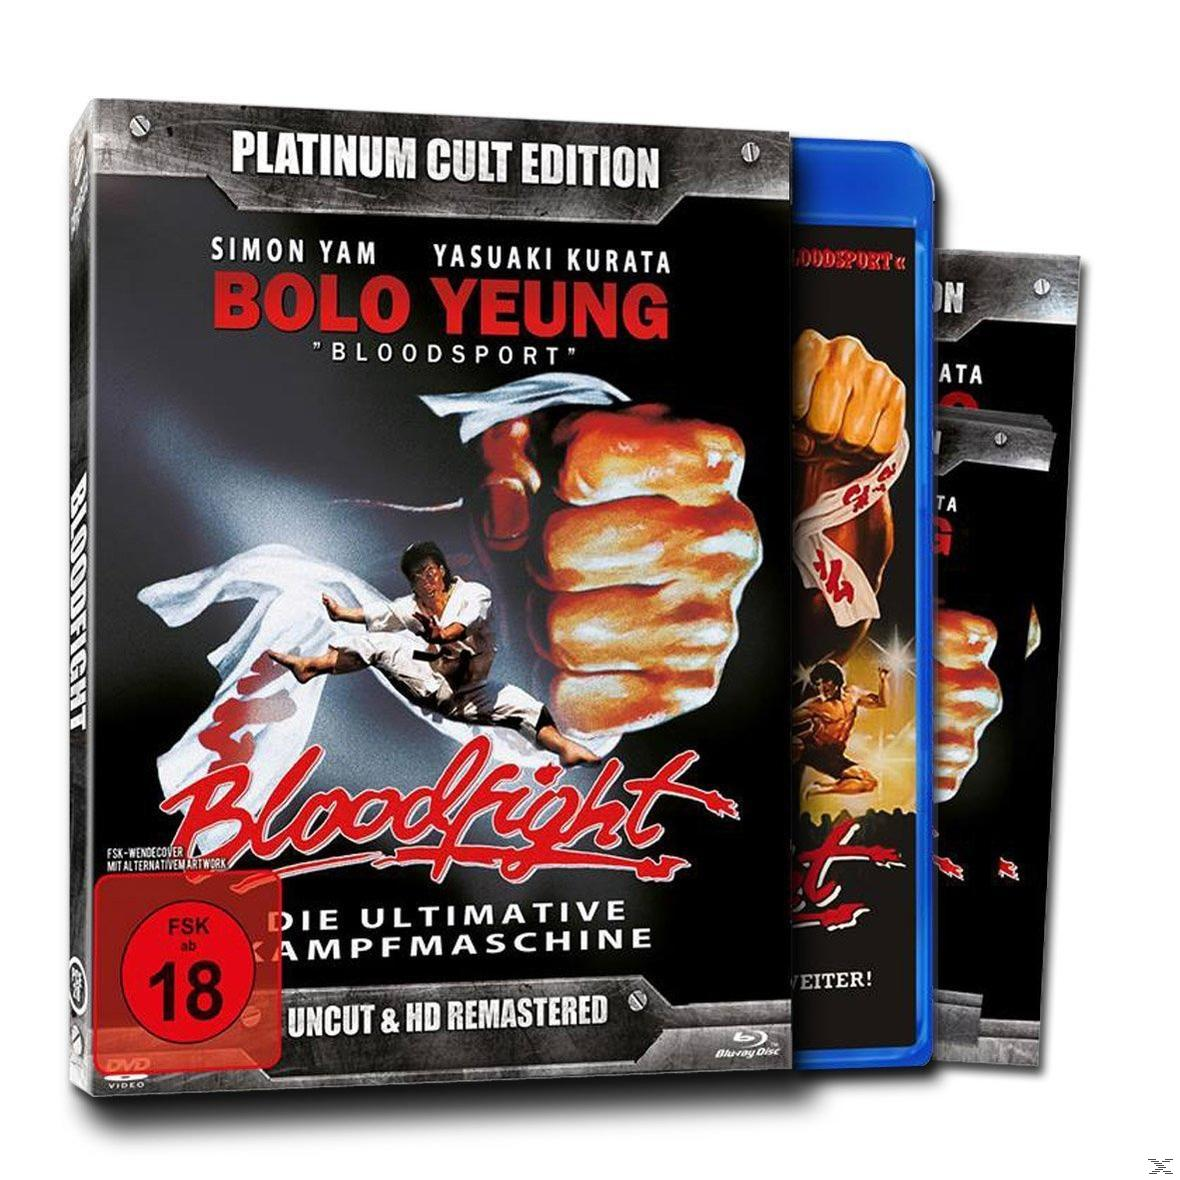 + Blu-ray DVD Bloodfight